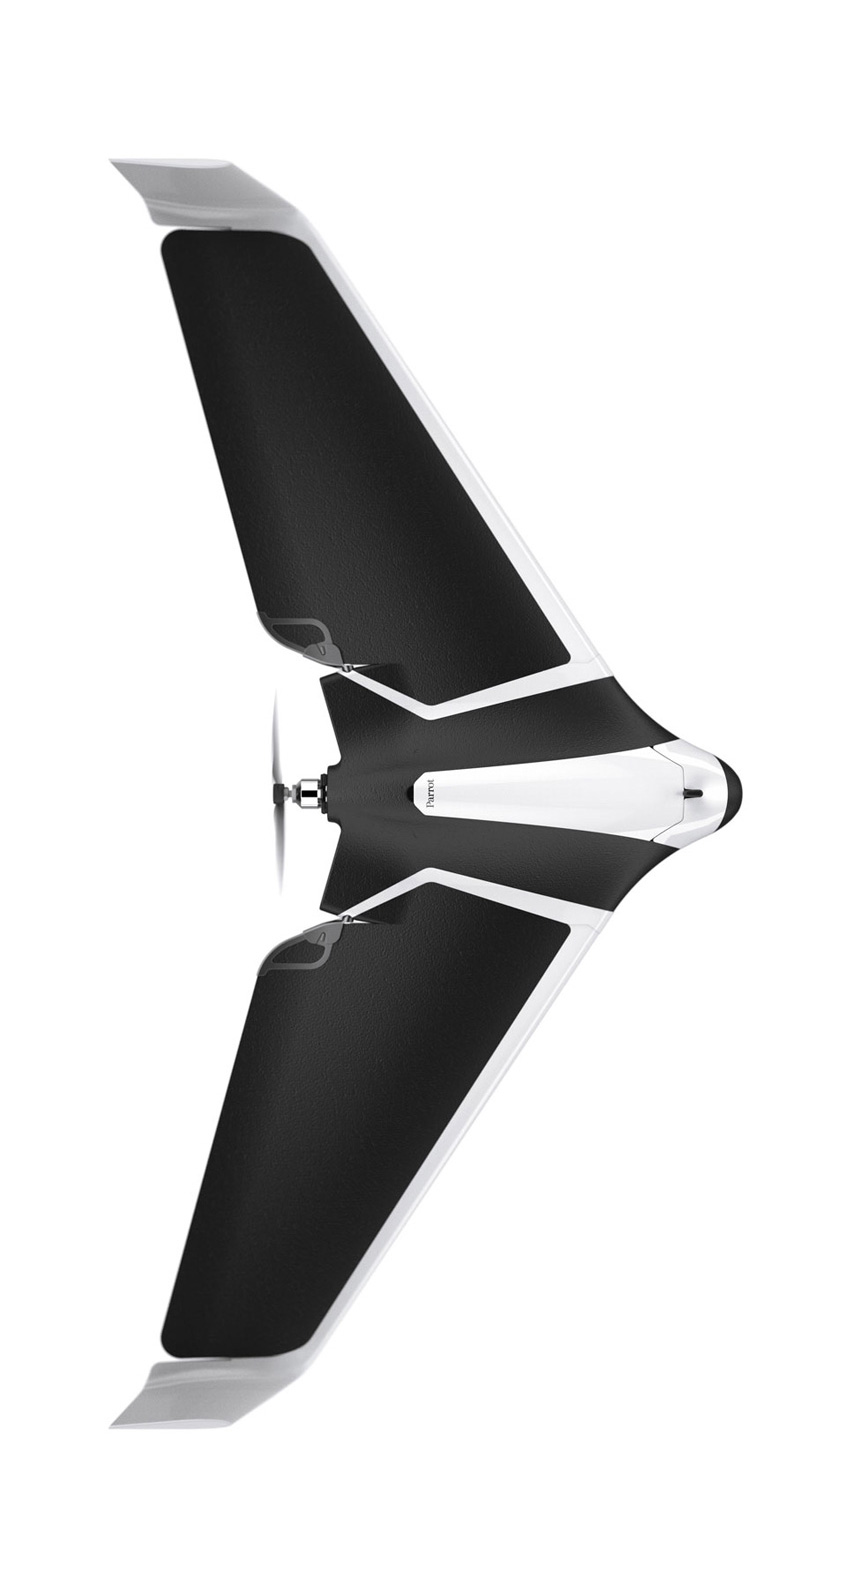 Drone-Prototype-Flights-01.jpg (860×1590)